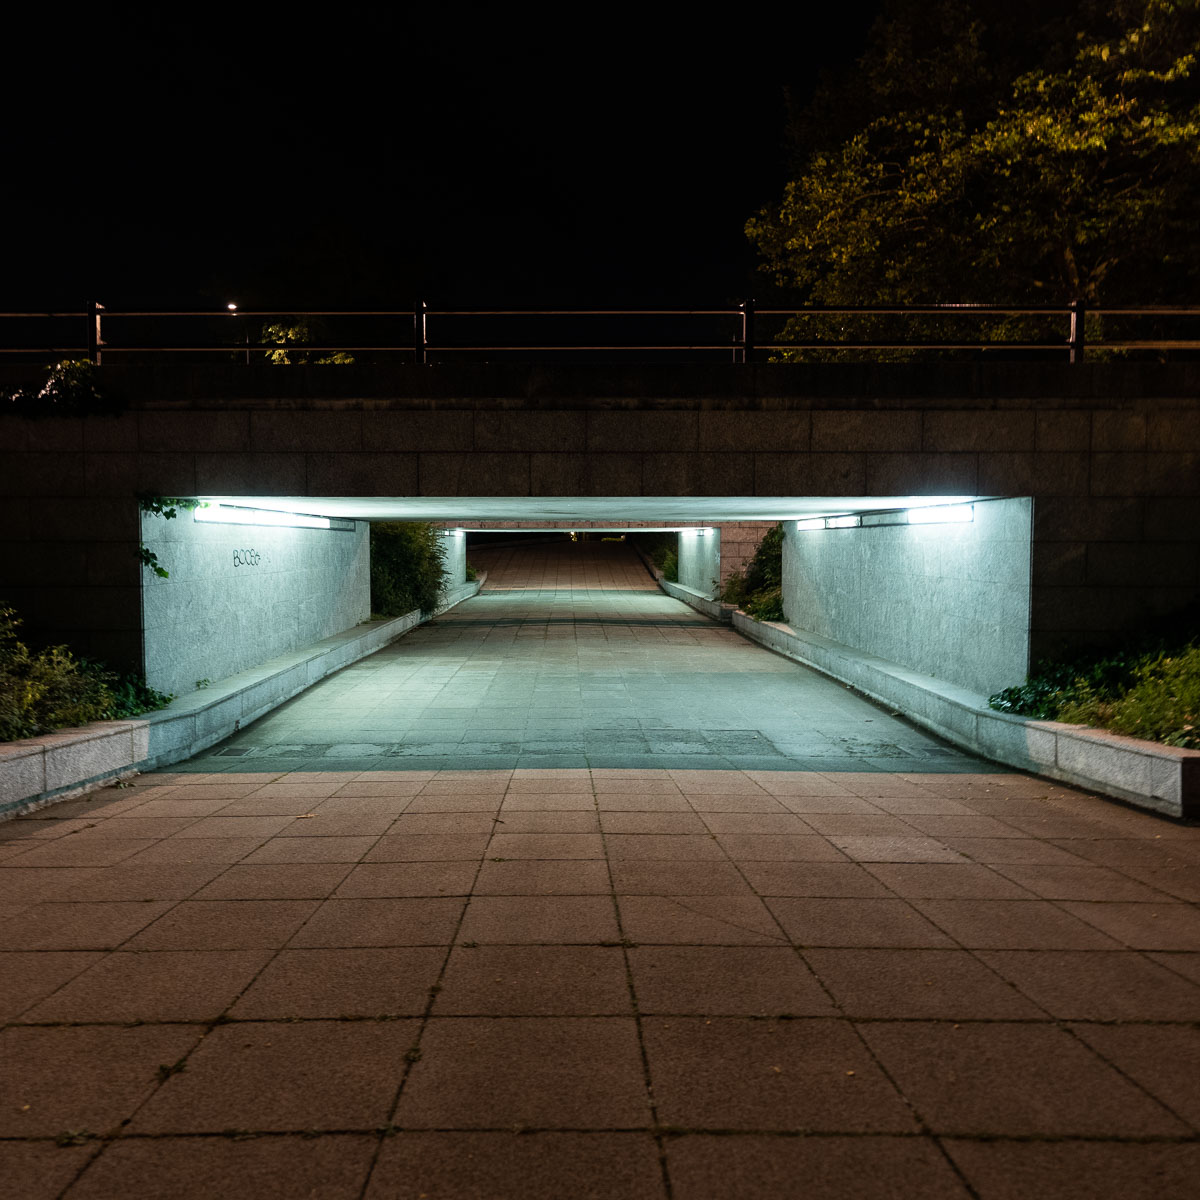 Entrance of a grimy Milton Keynes underpass